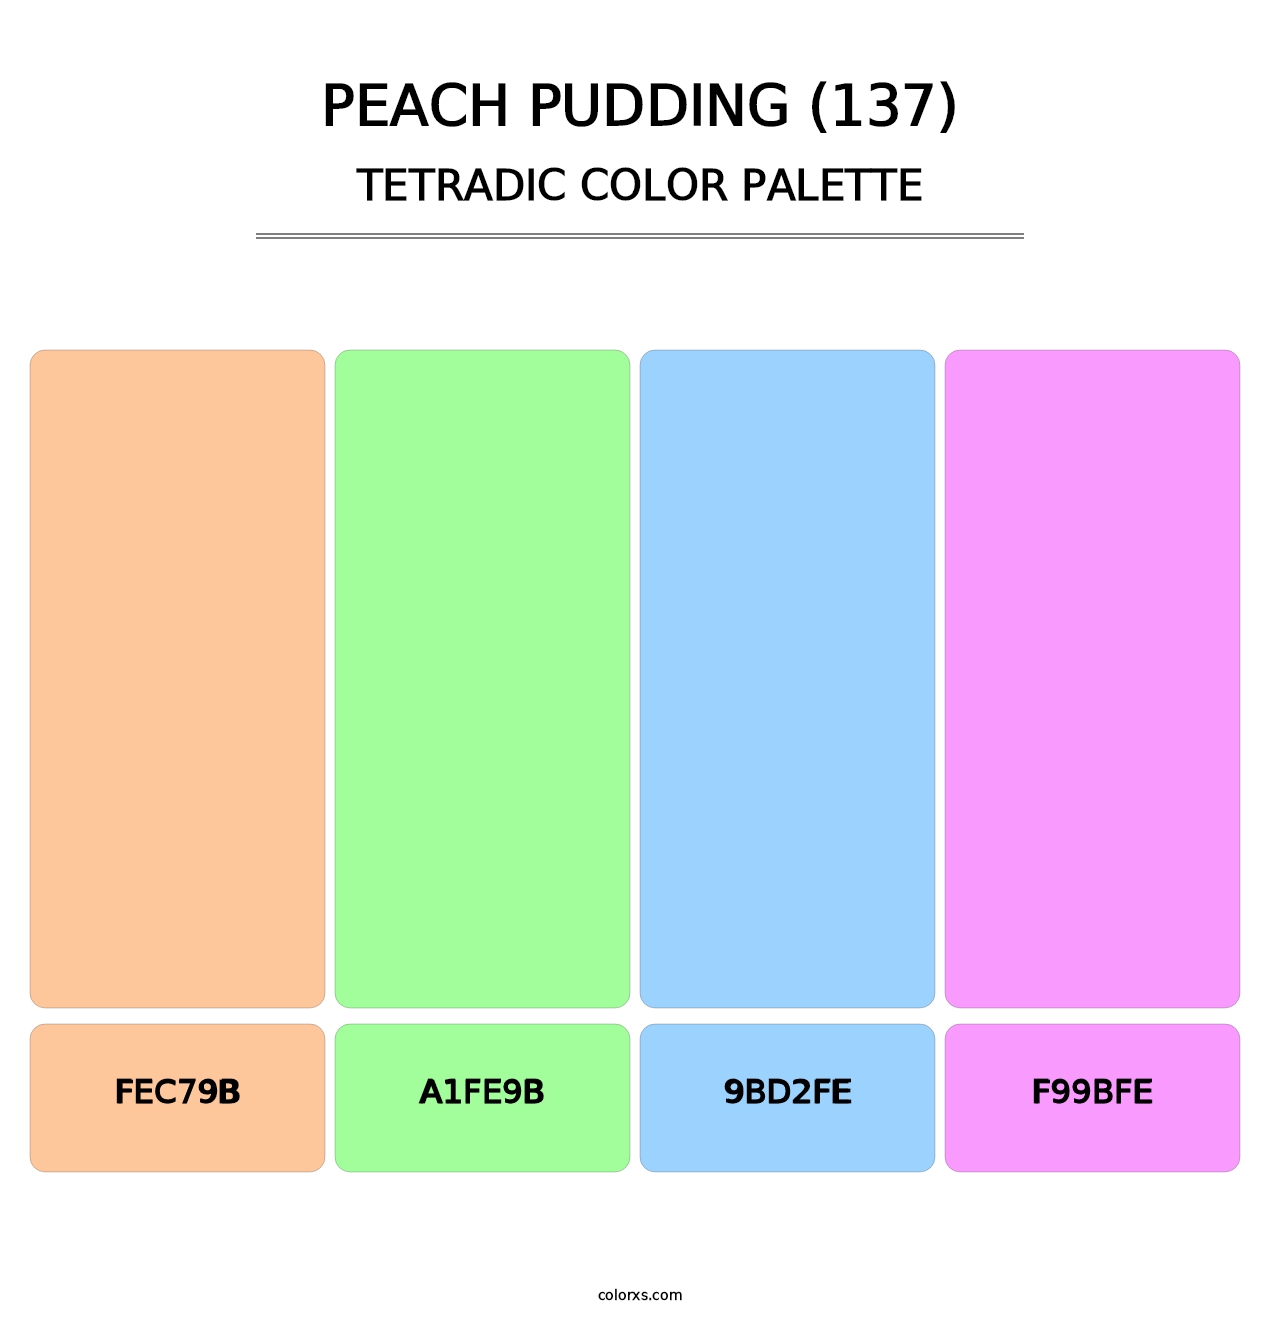 Peach Pudding (137) - Tetradic Color Palette